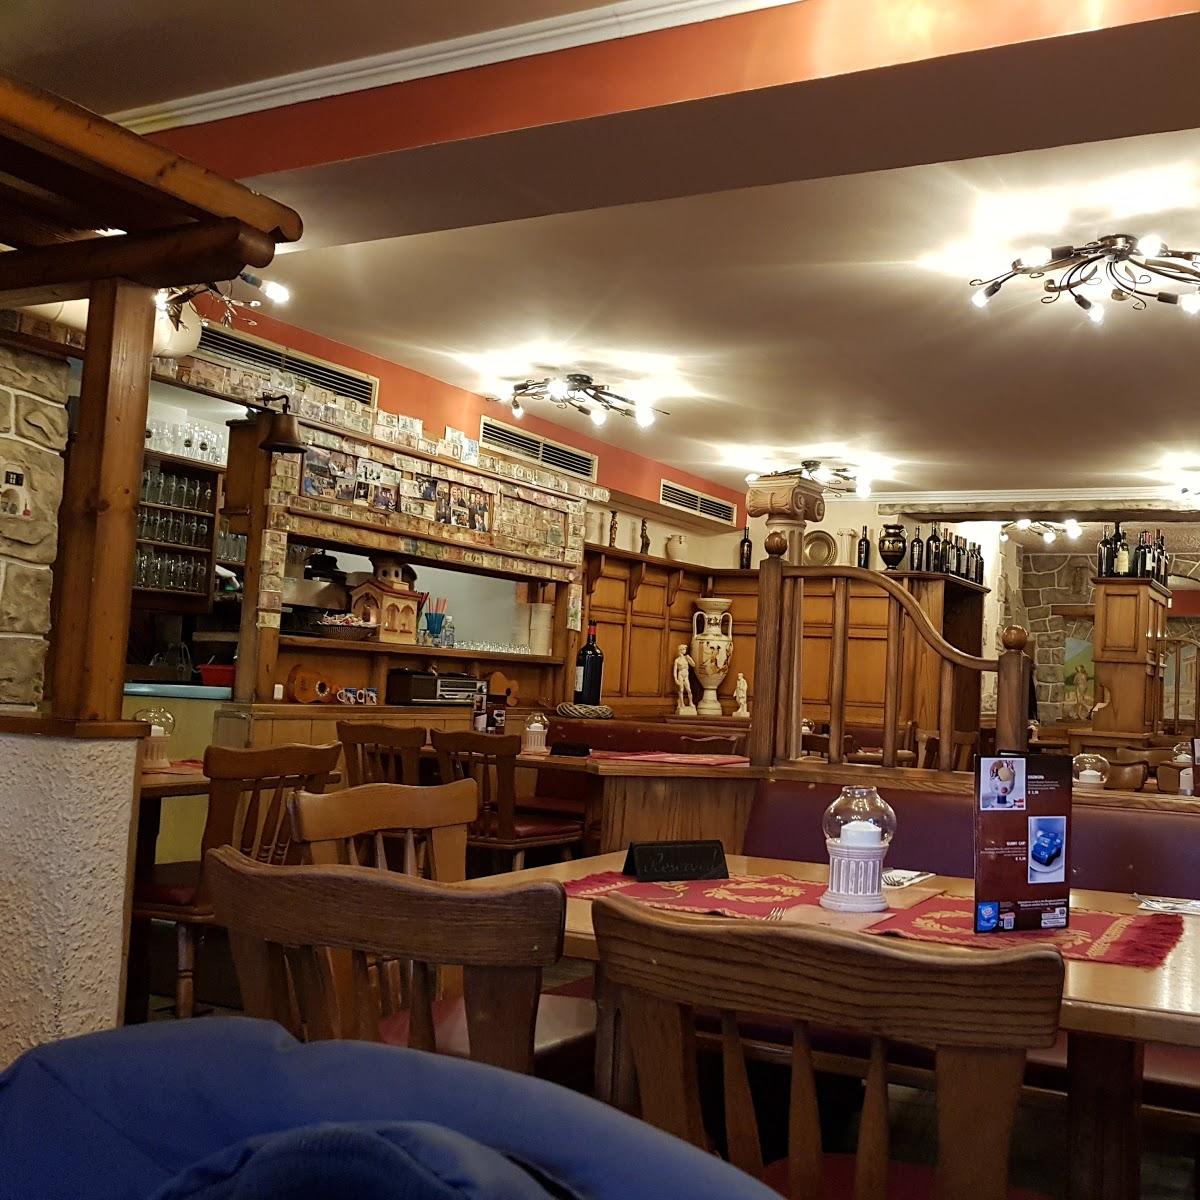 Restaurant "Restaurant Dionysos" in  Erding